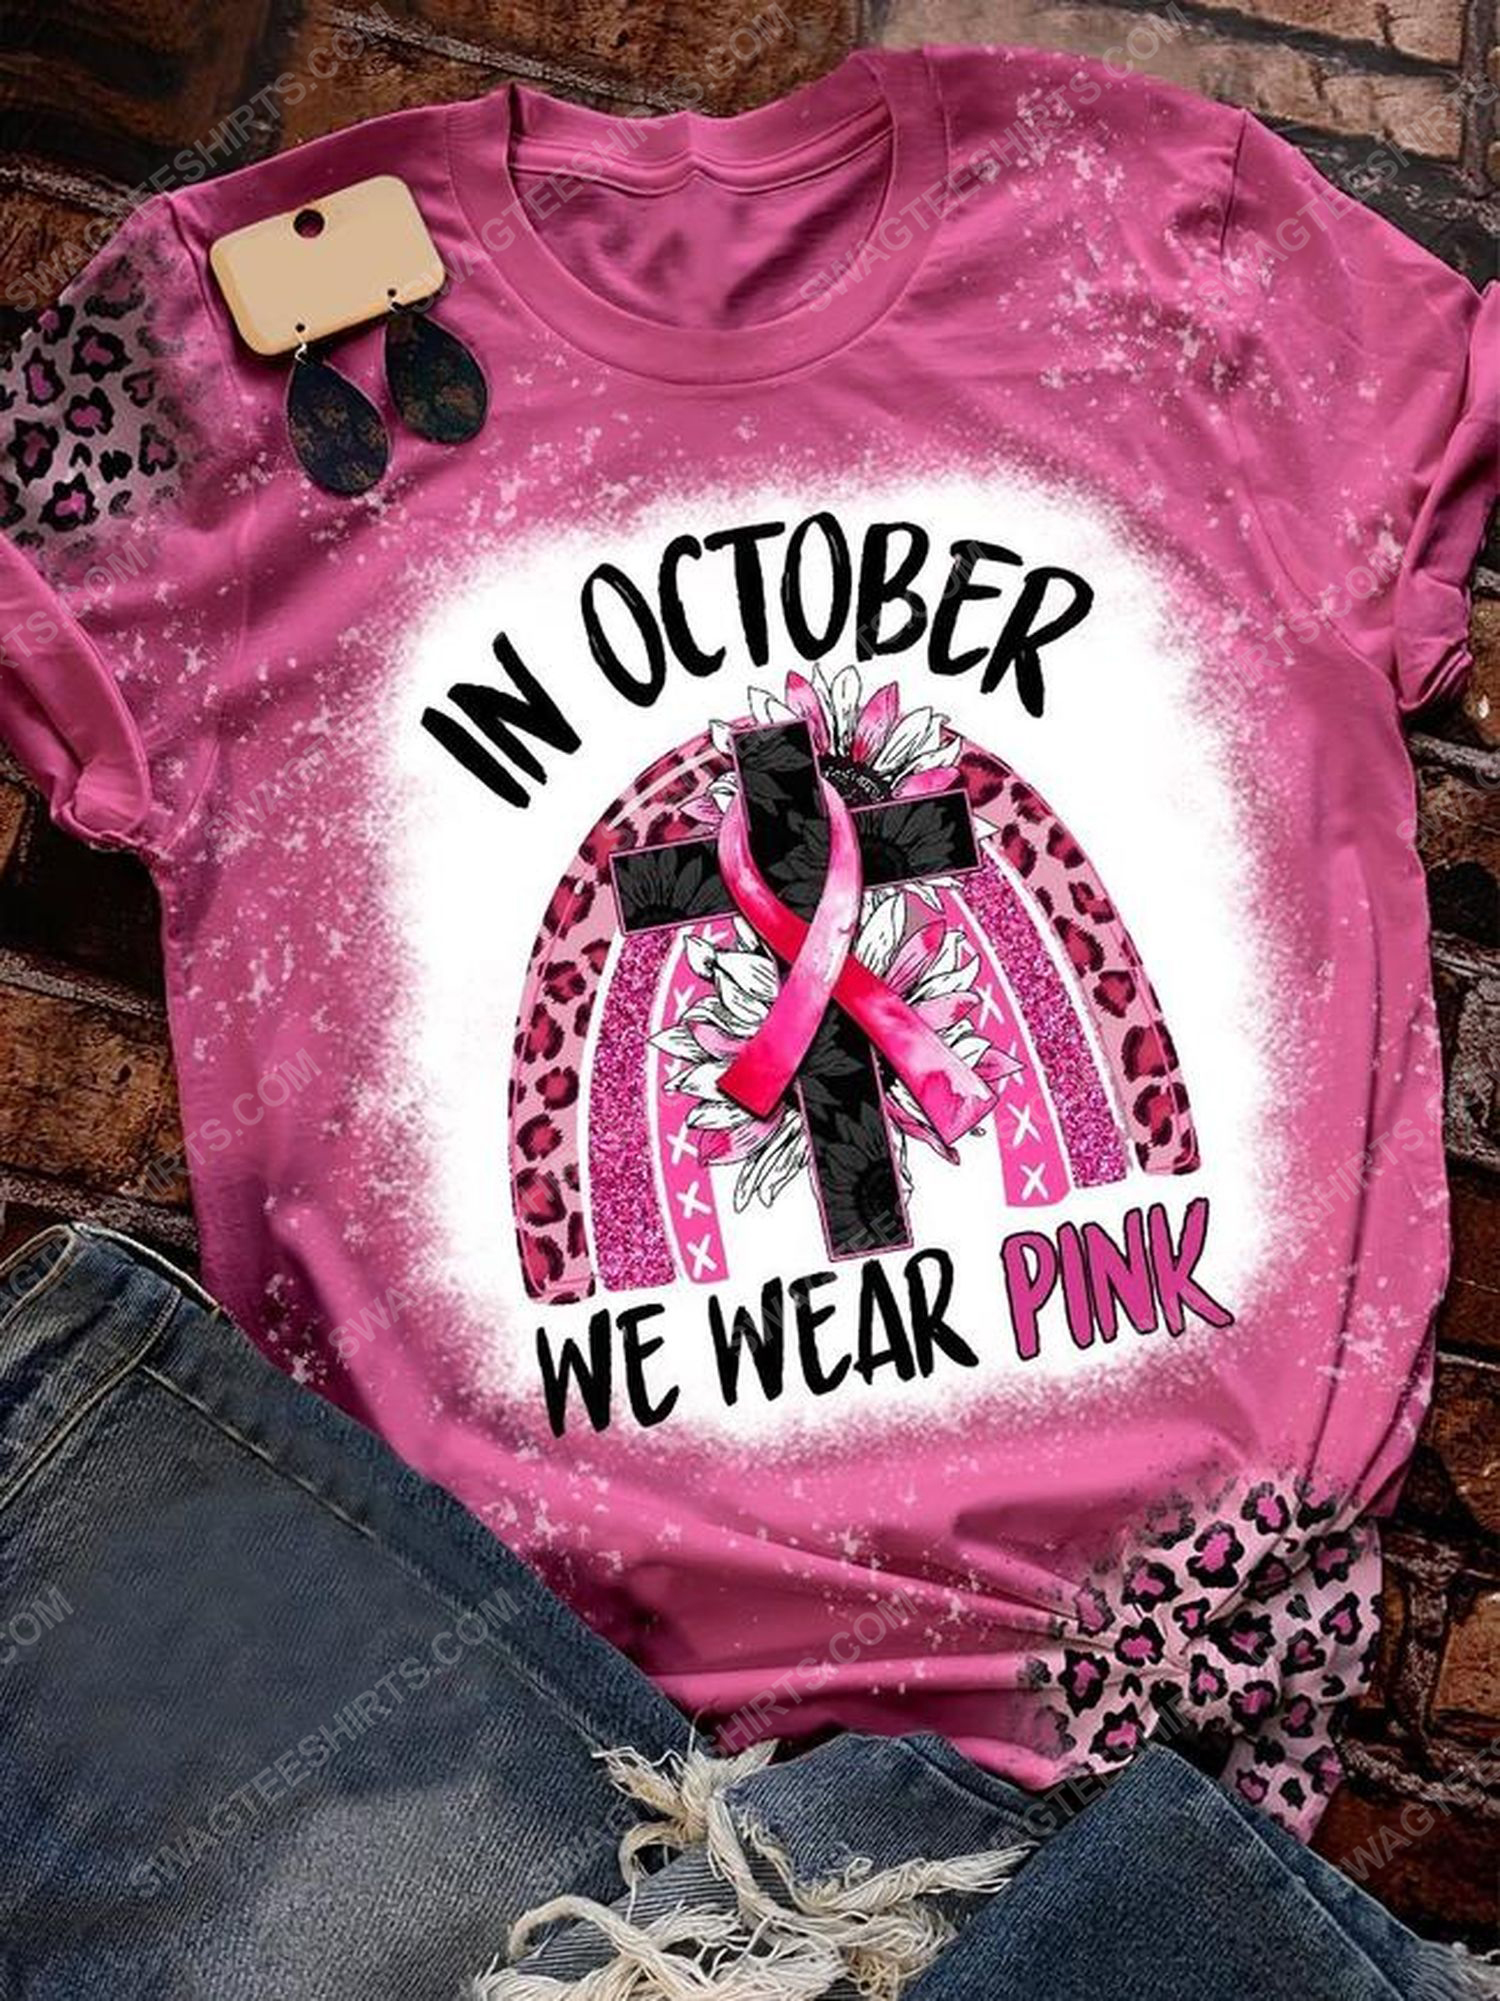 Breast cancer awareness in october we wear pink leopard shirt 1